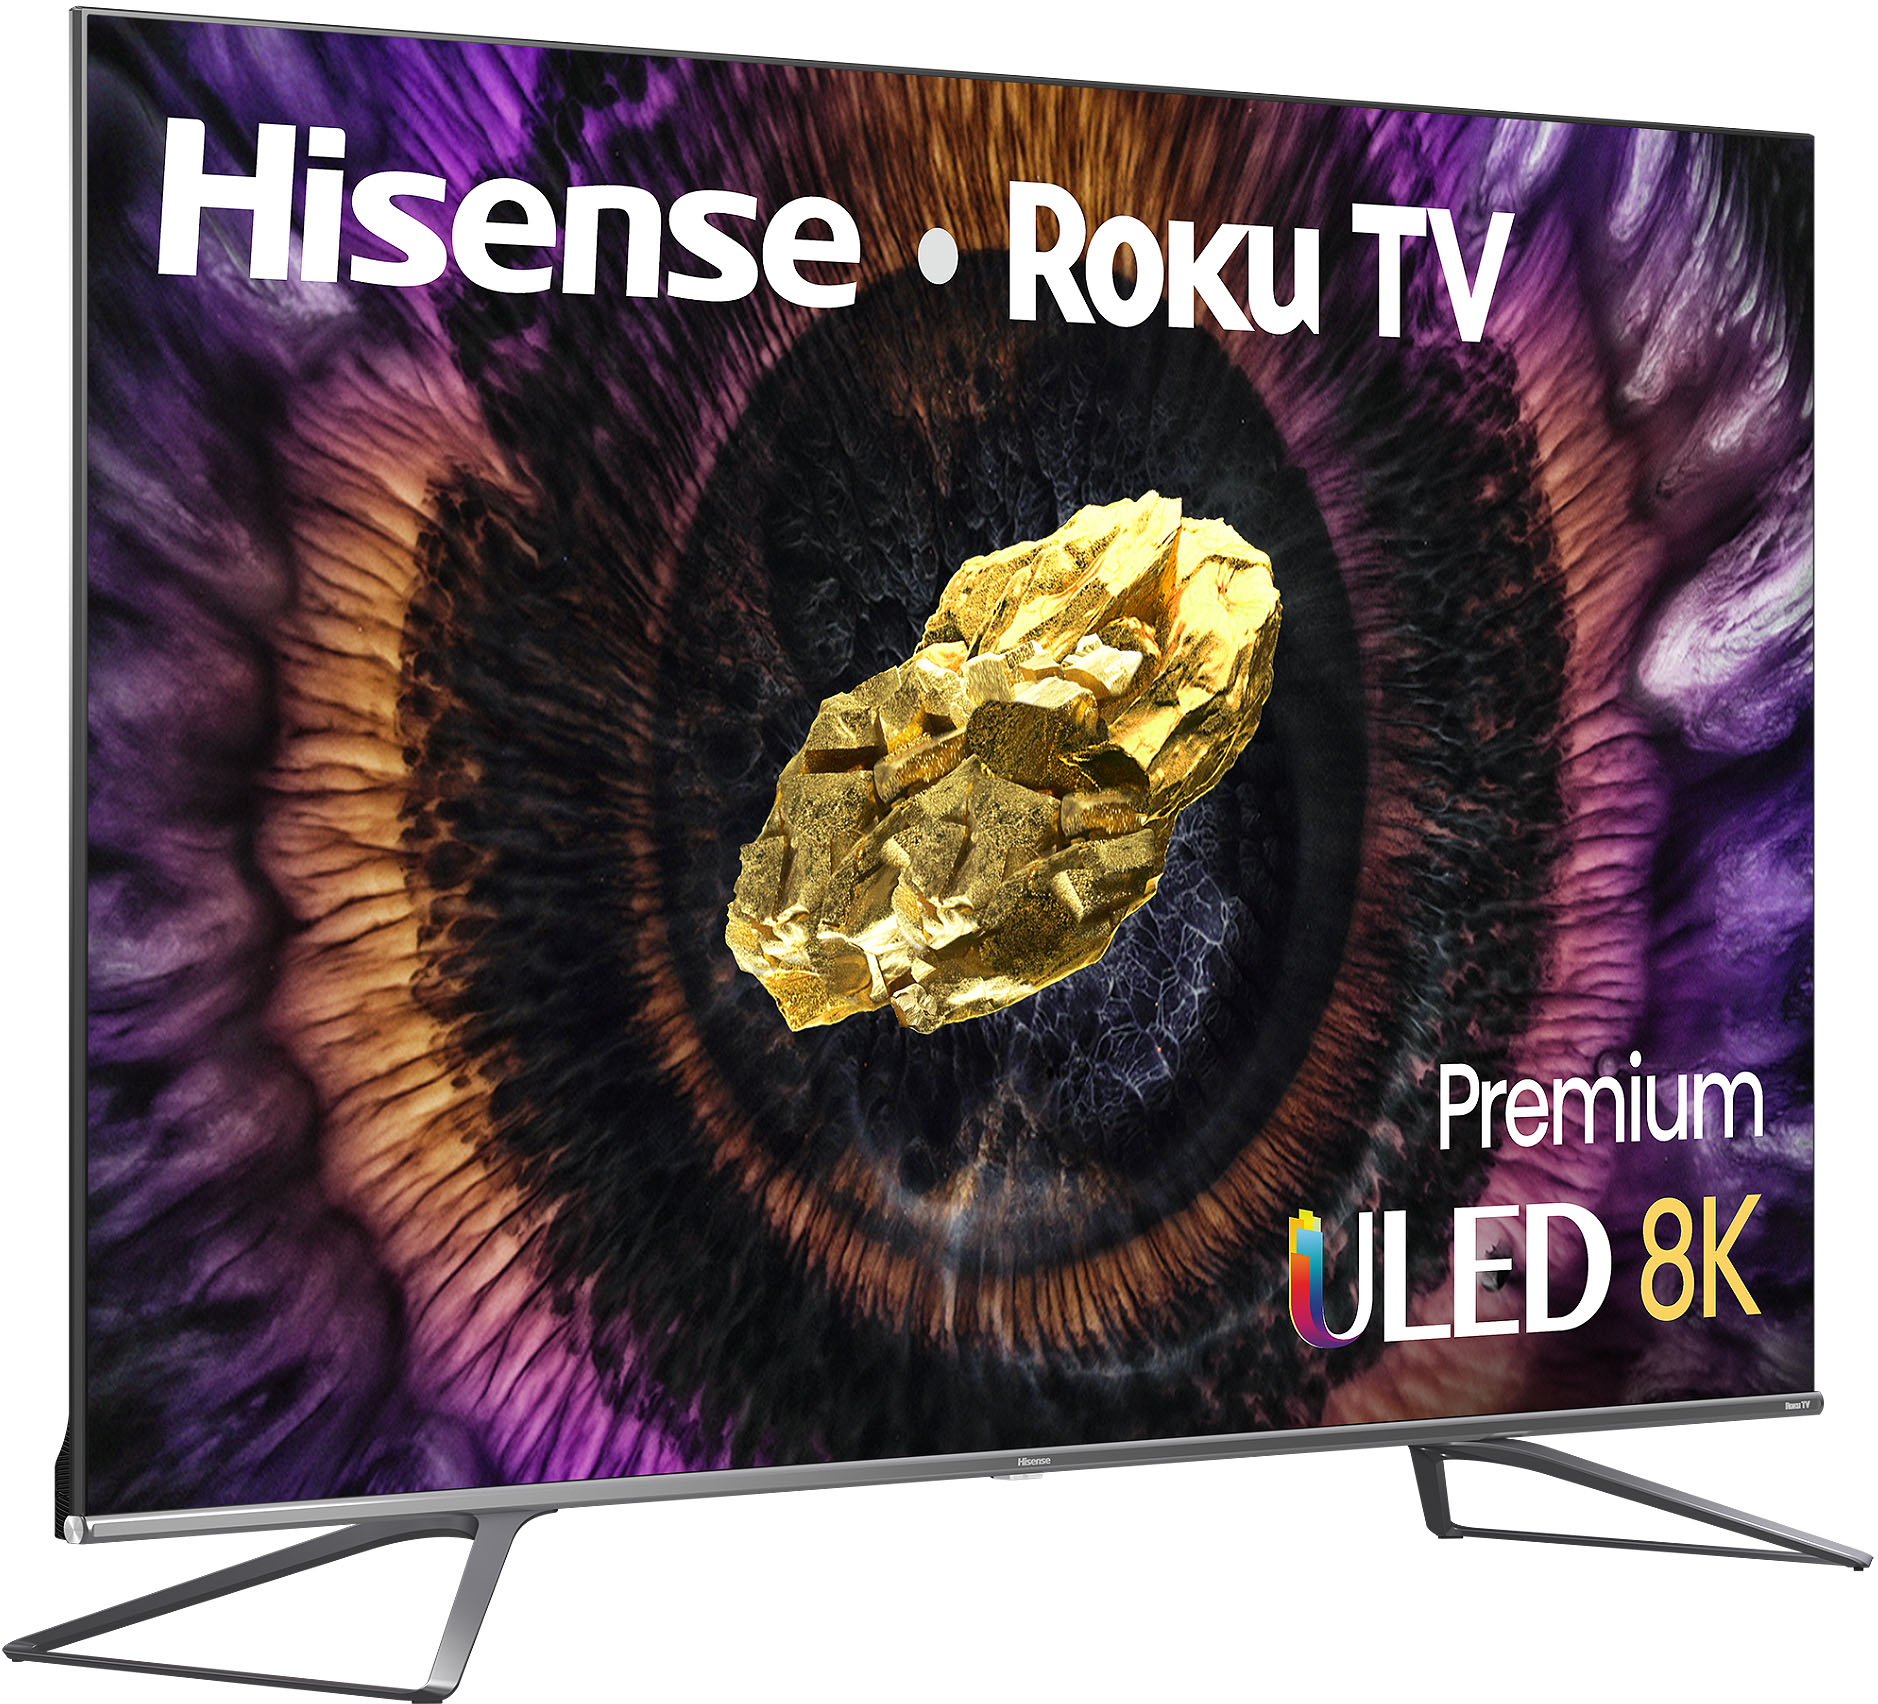 Hisense - 75" Class U800GR 8K ULED 120Hz Roku TV @ Best Buy $1399.99